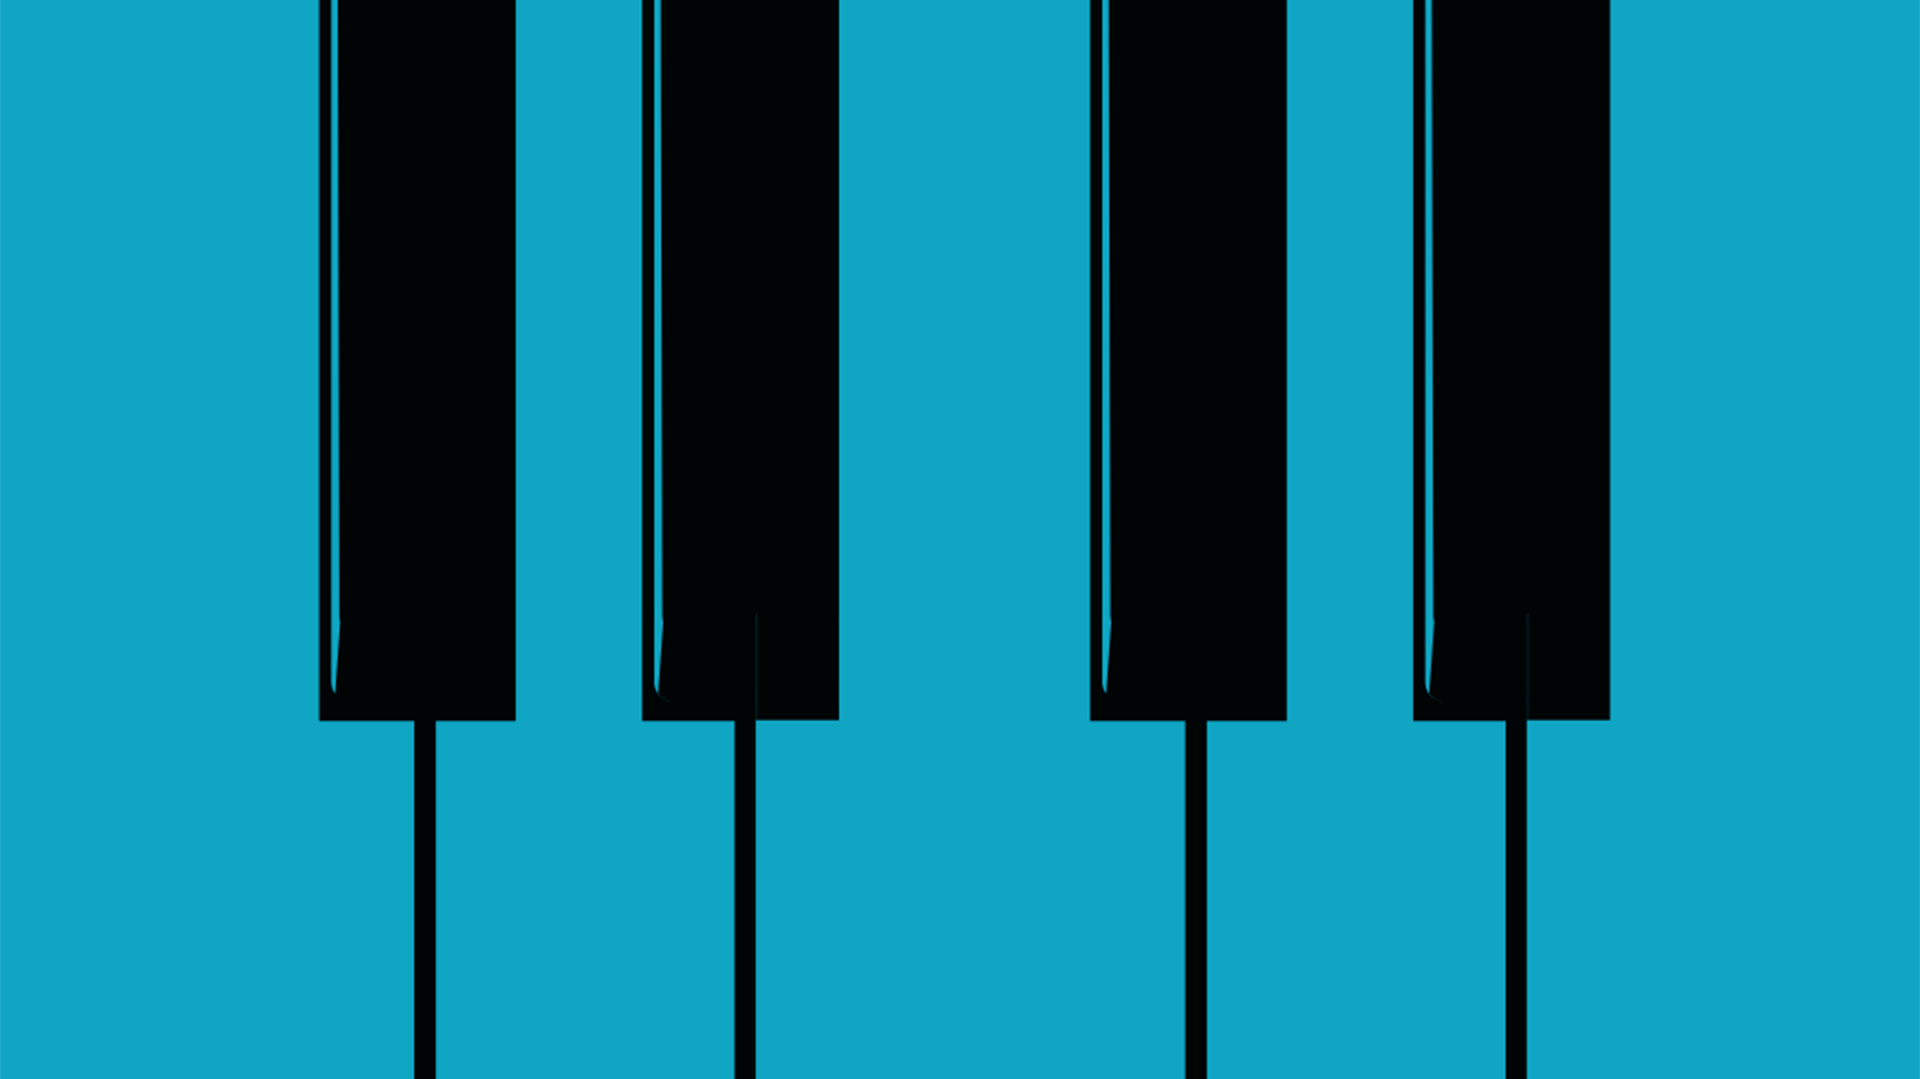 piano keys illustration on teal background